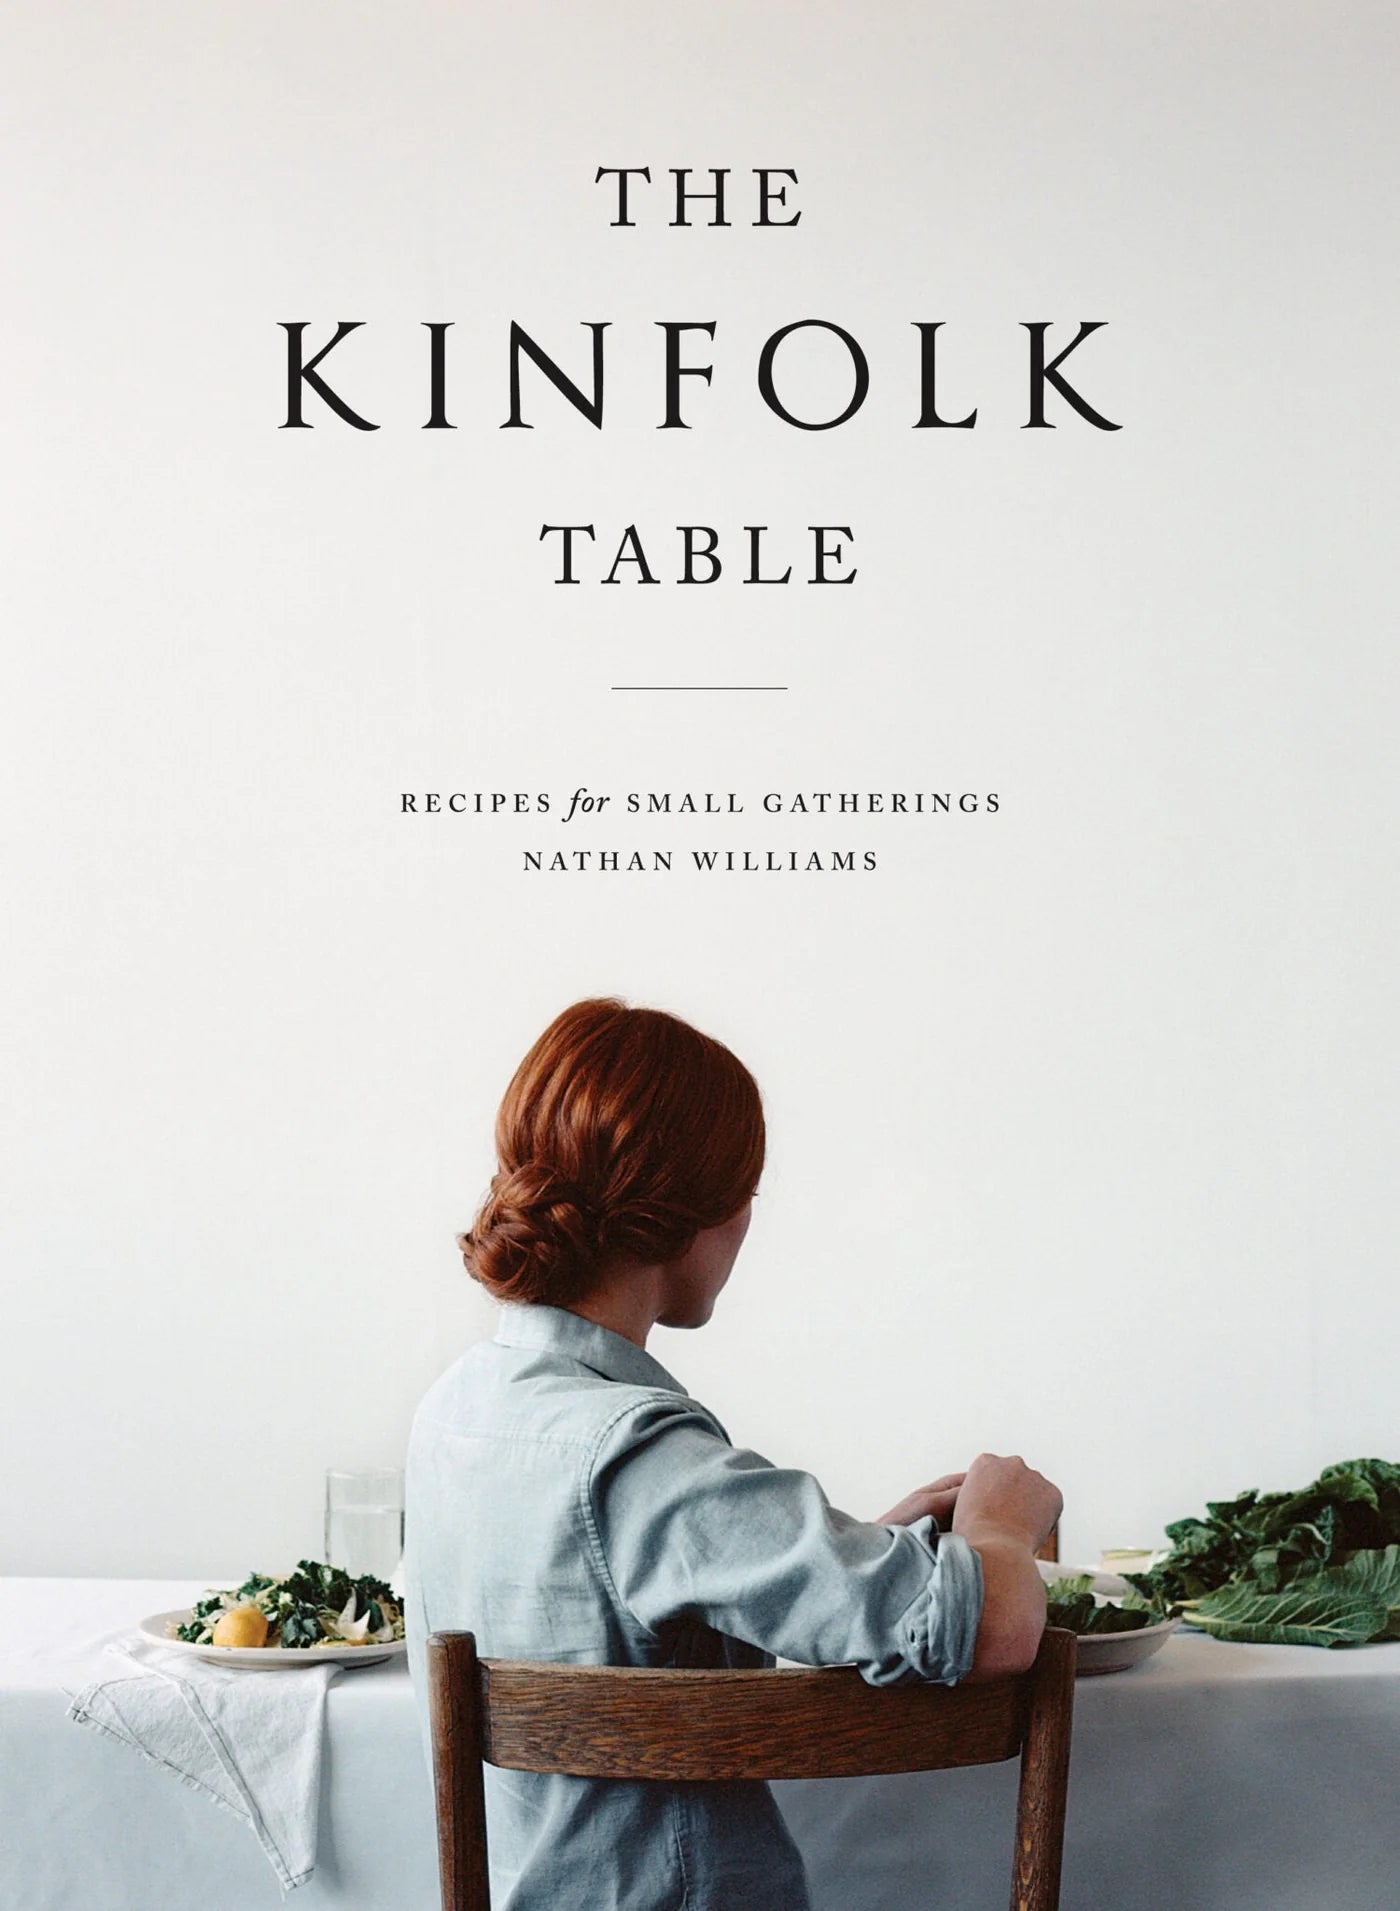 Kinfolk Table by Nathan Williams